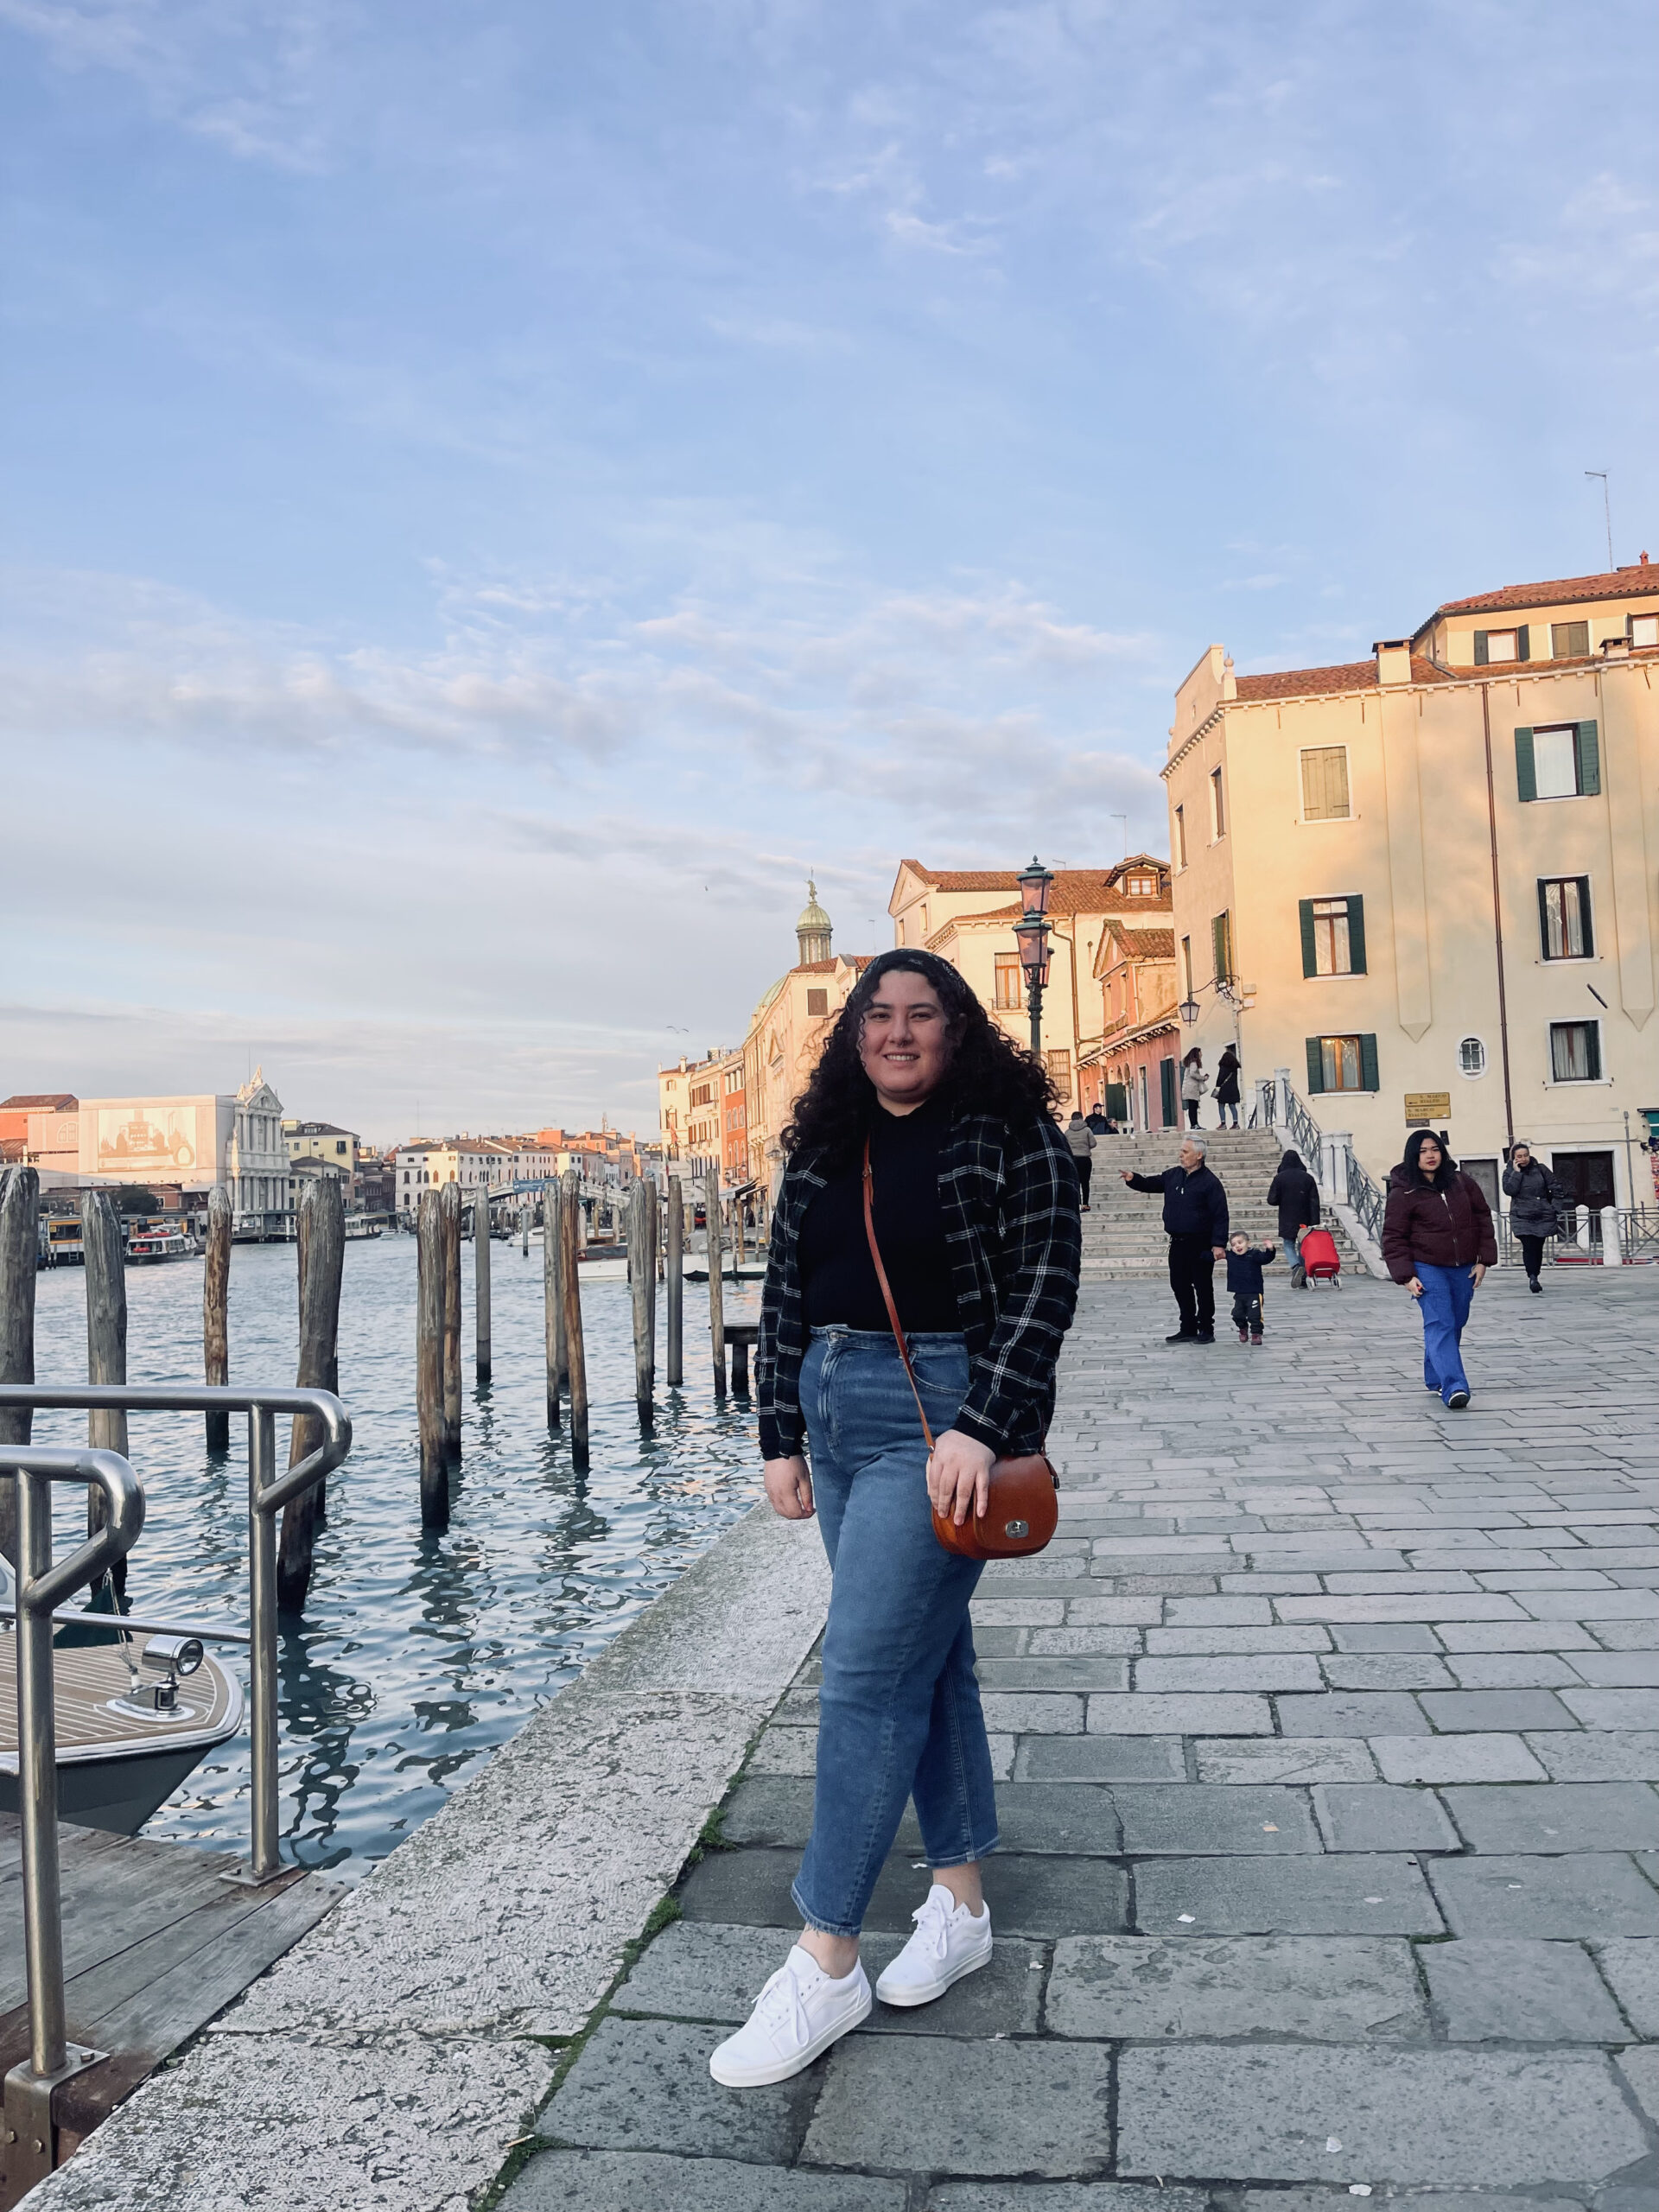 Visiting Venice: Week 3